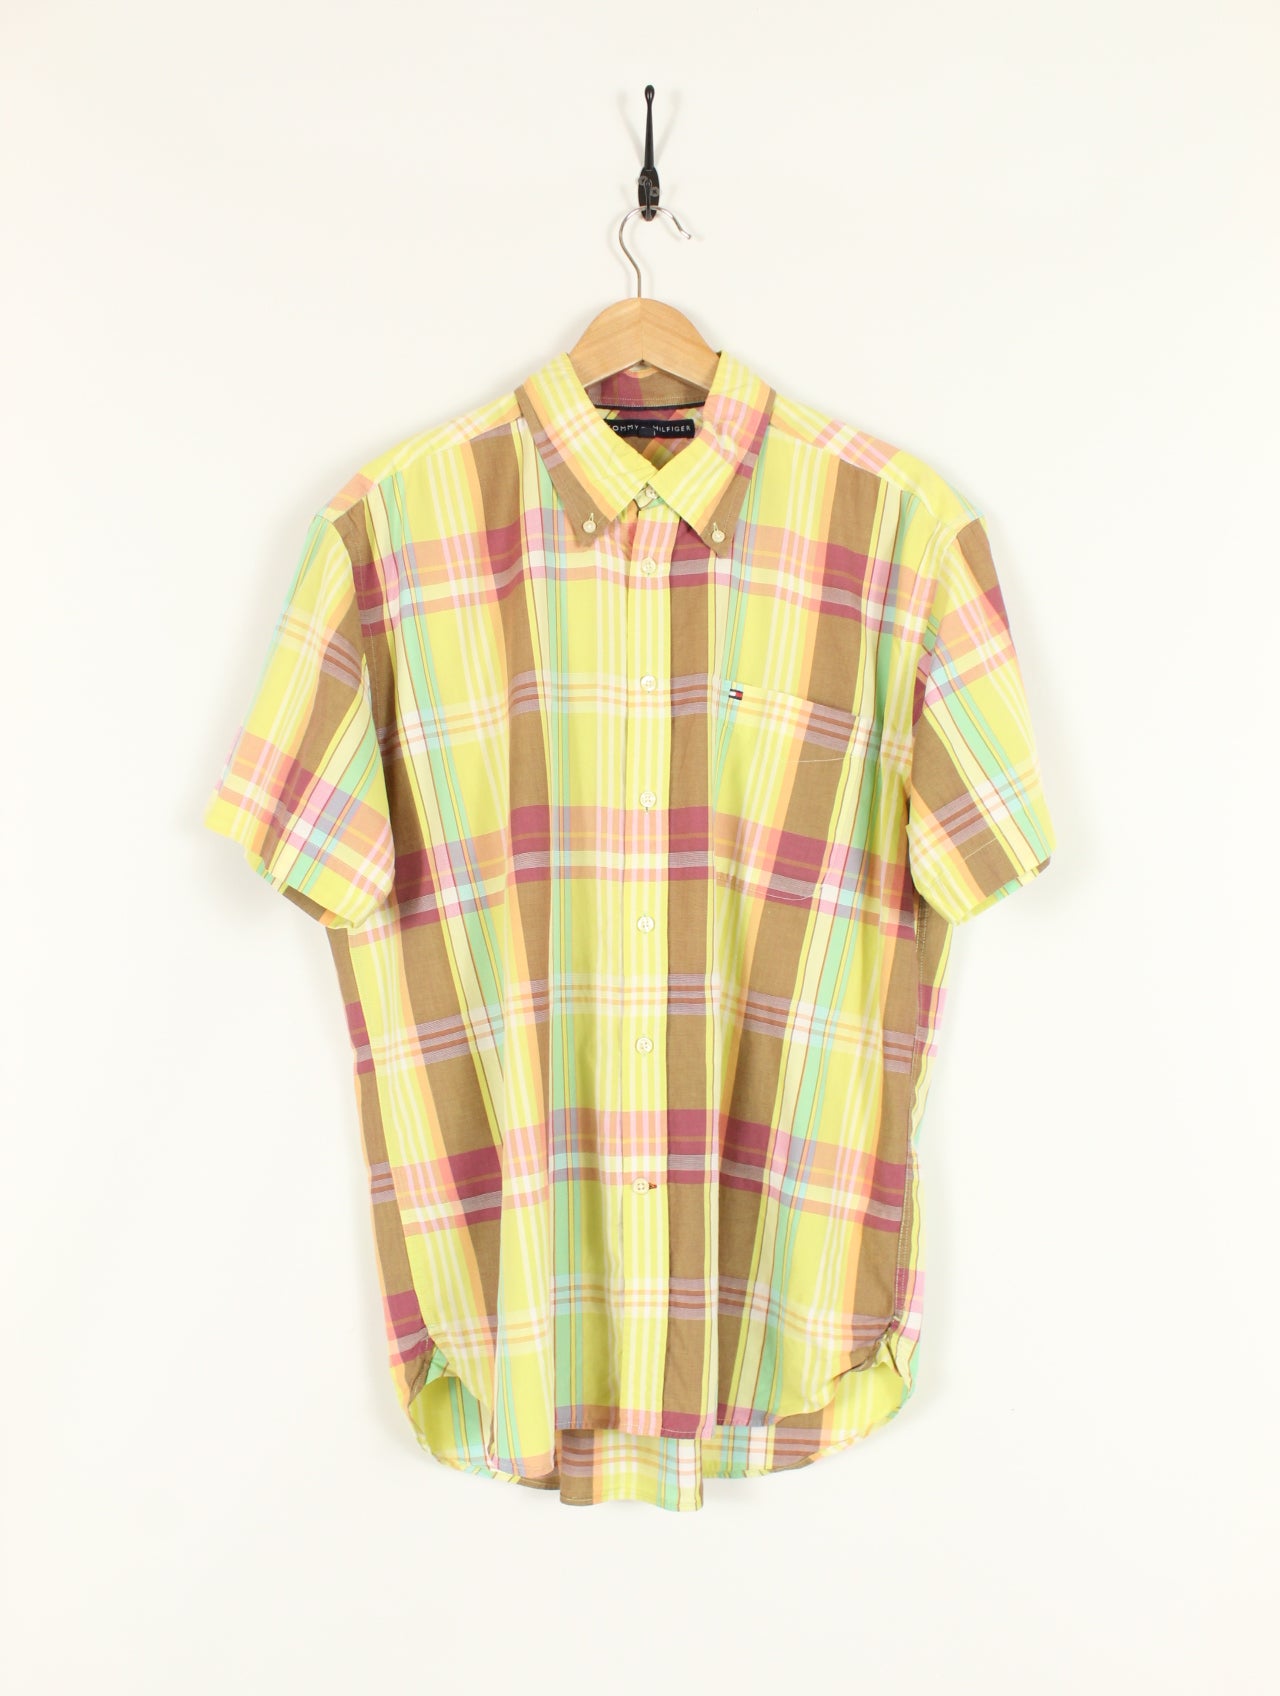 Short Sleeve Tommy Hilfiger Plaid Shirt (M/L)